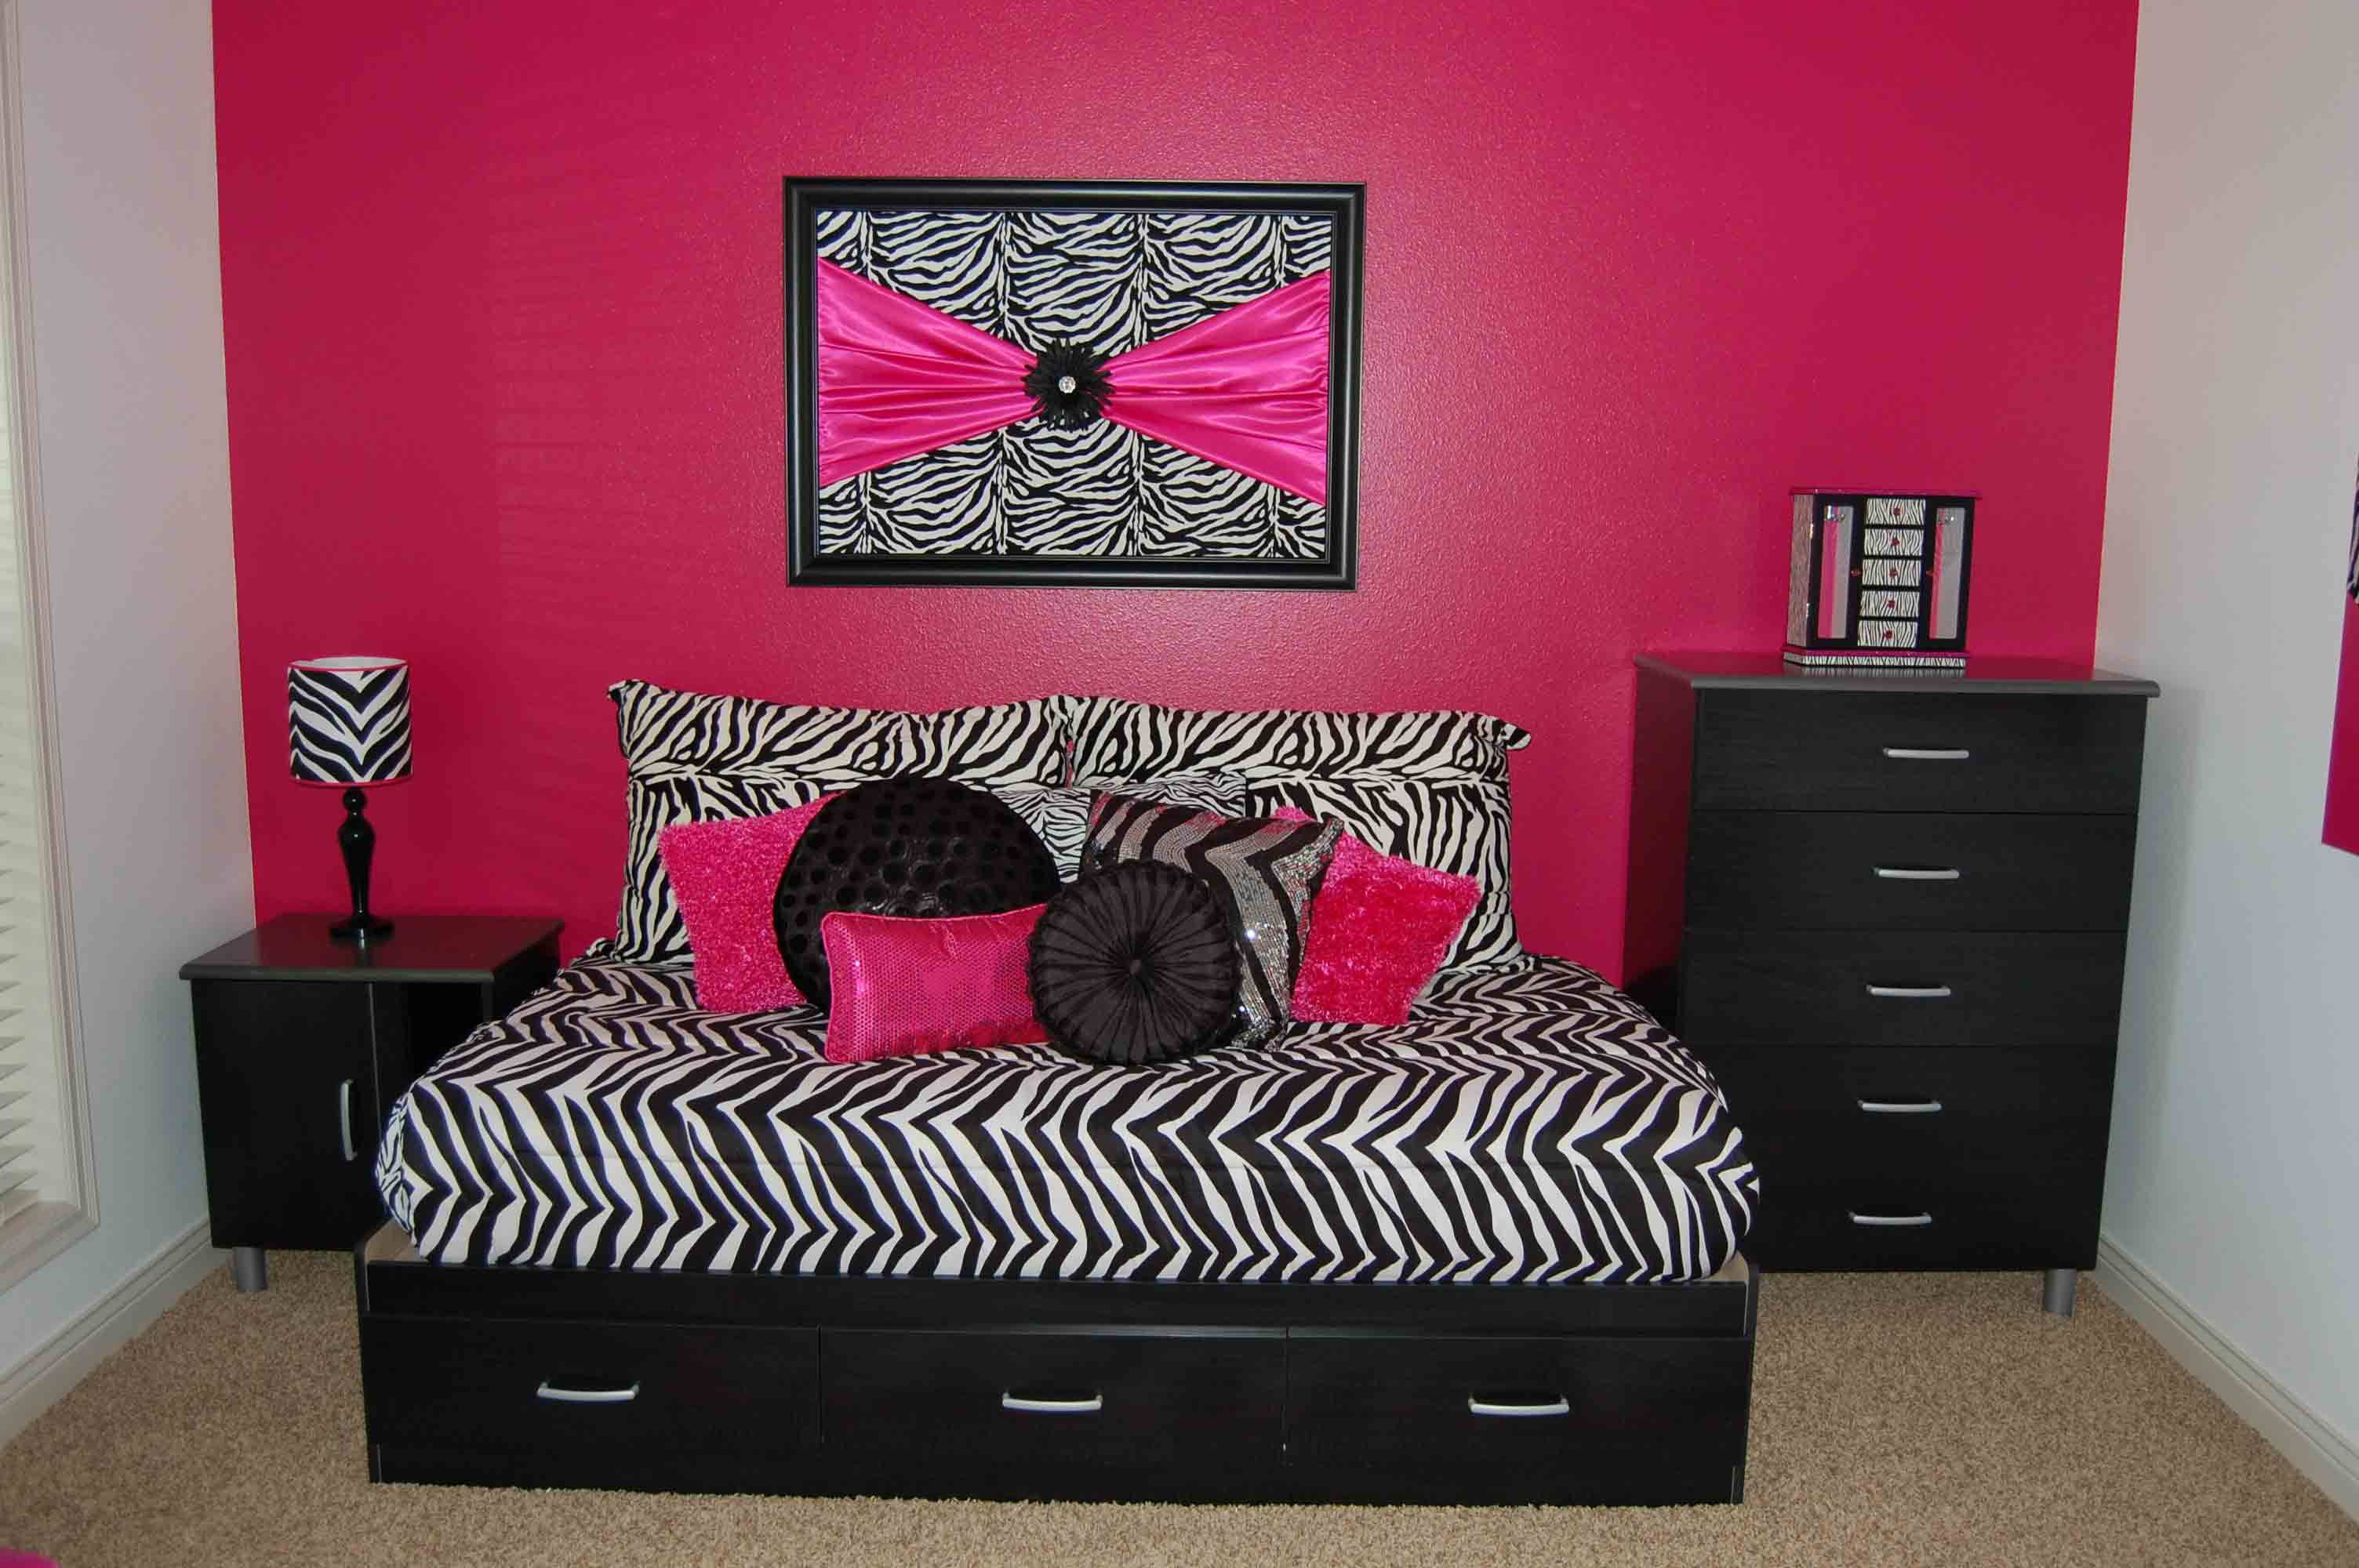 zebra-print-bedroom-decorating-ideas | Interior Design Center Inspiration